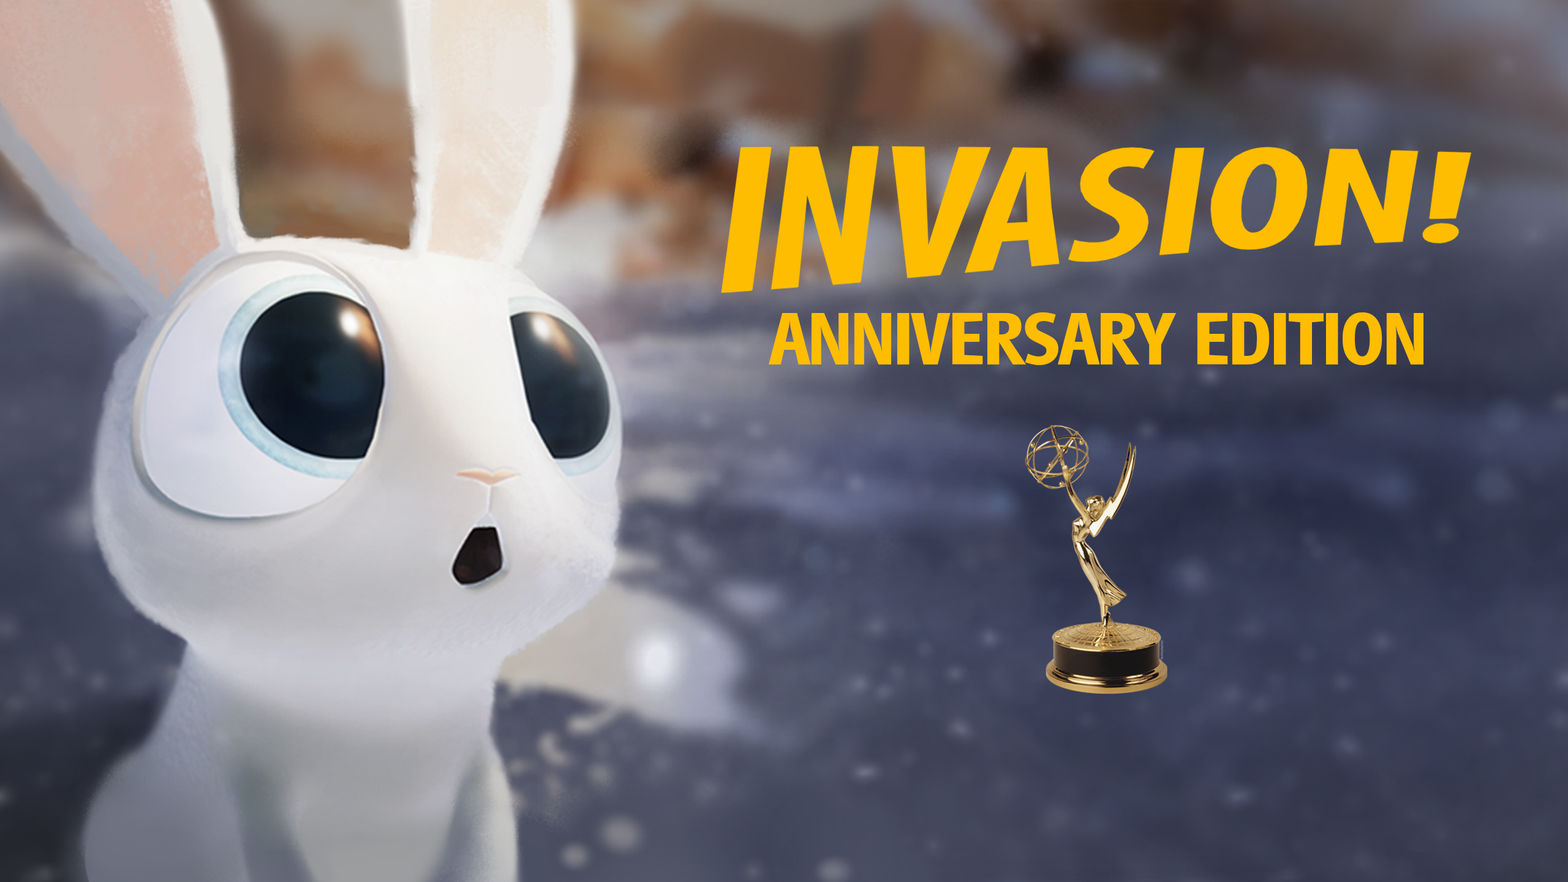 INVASION! Anniversary Edition